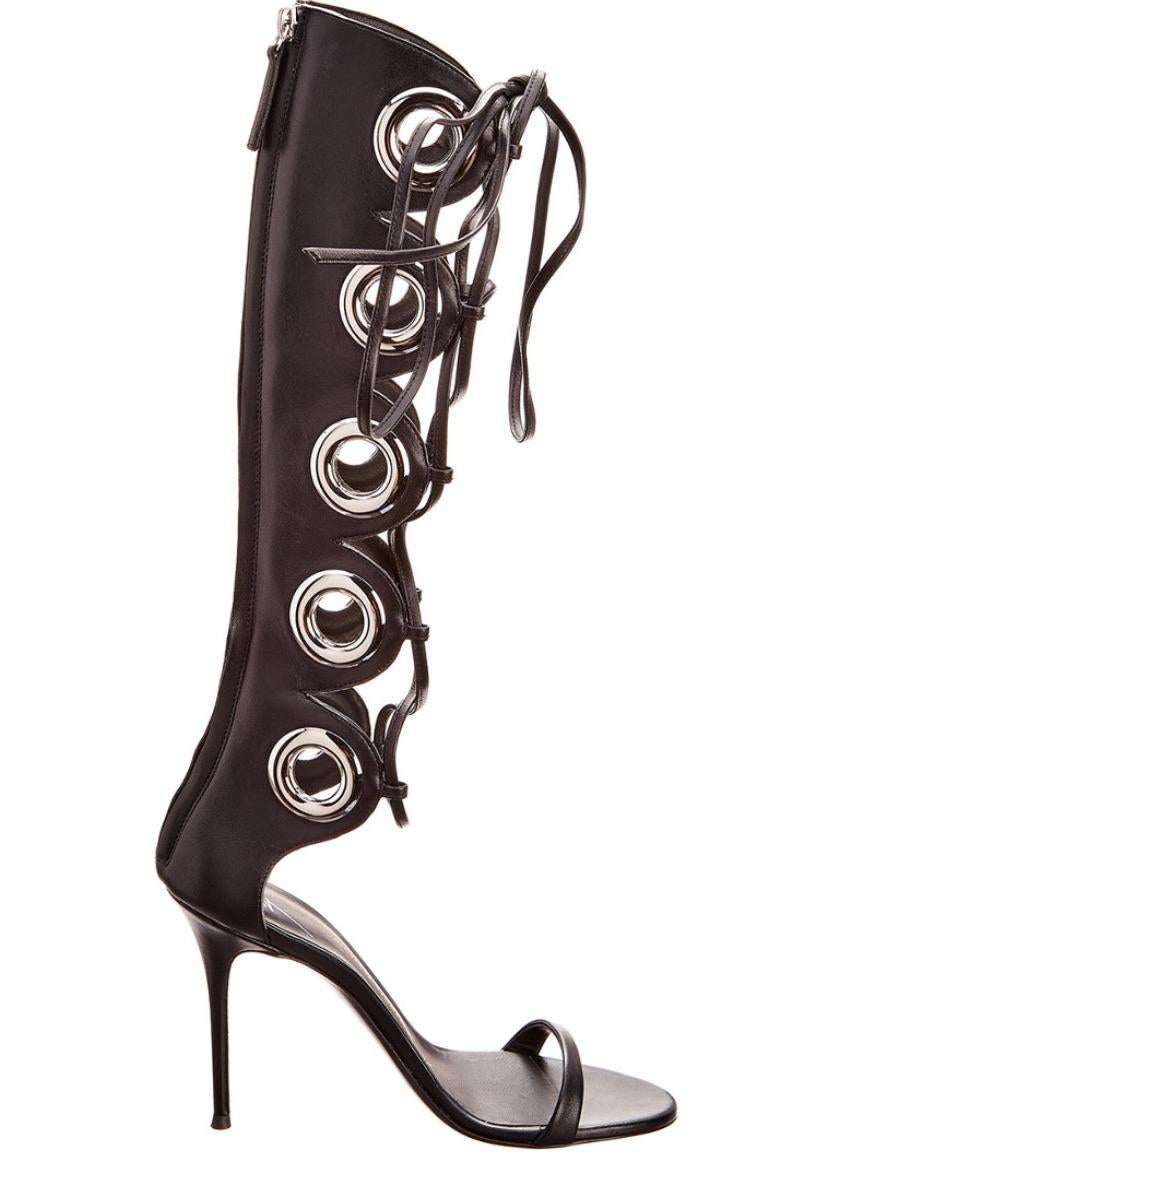 Women's Giuseppe Zanotti NEW Black Leather Silver Grommet Lace Up Sandals Heels in Box 